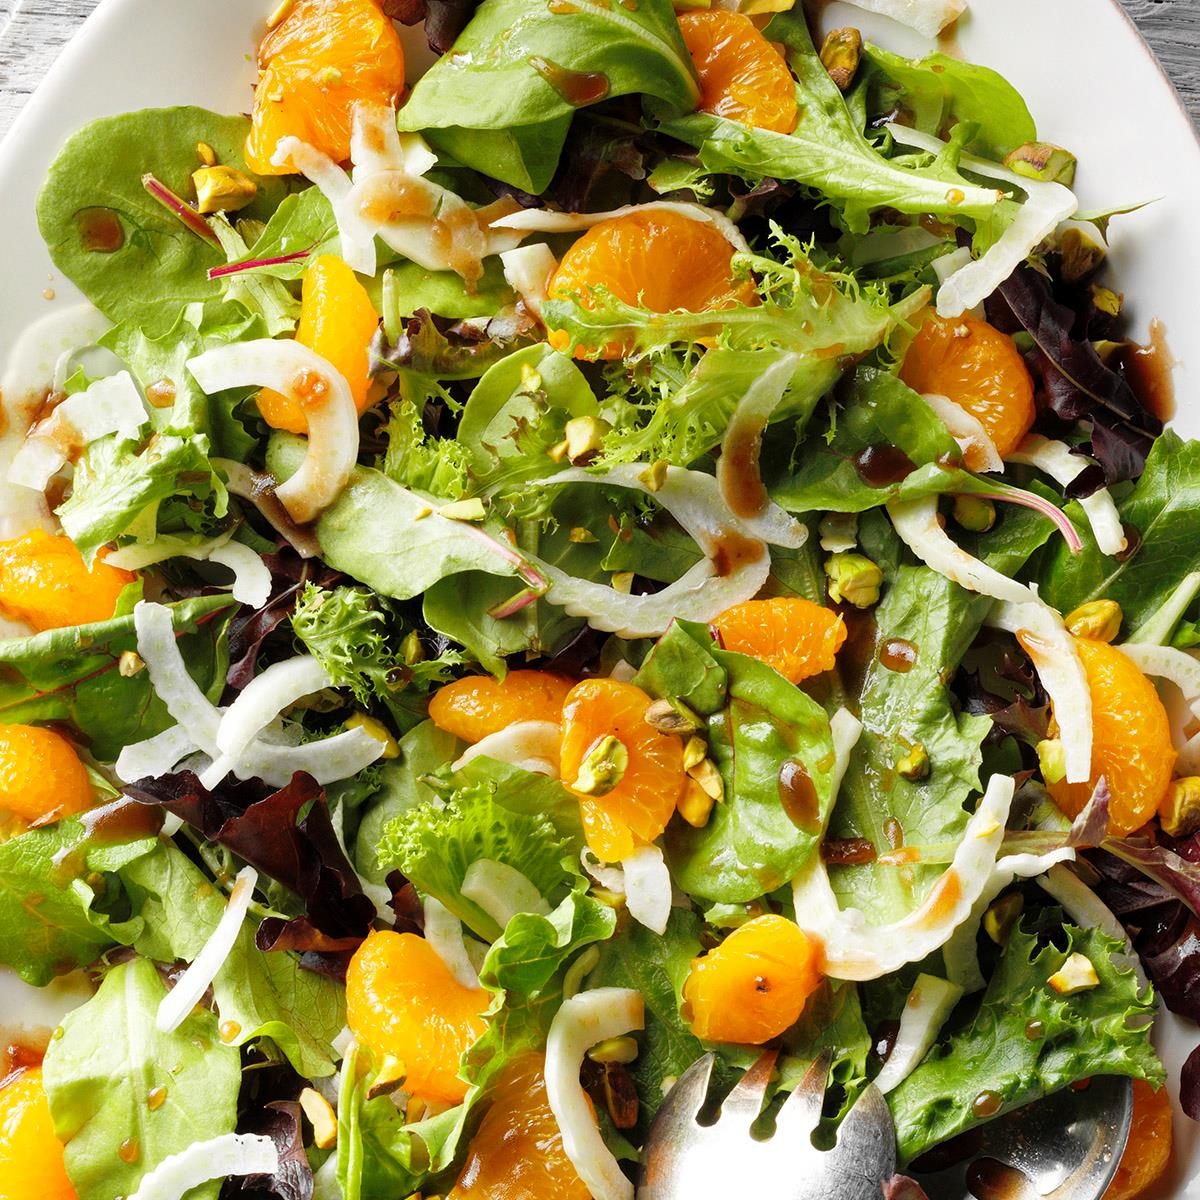 https://www.tasteofhome.com/wp-content/uploads/2018/01/Fennel-Salad-with-Orange-Balsamic-Vinaigrette_EXPS_TOHCA23_70350_DR_08_18_1b.jpg